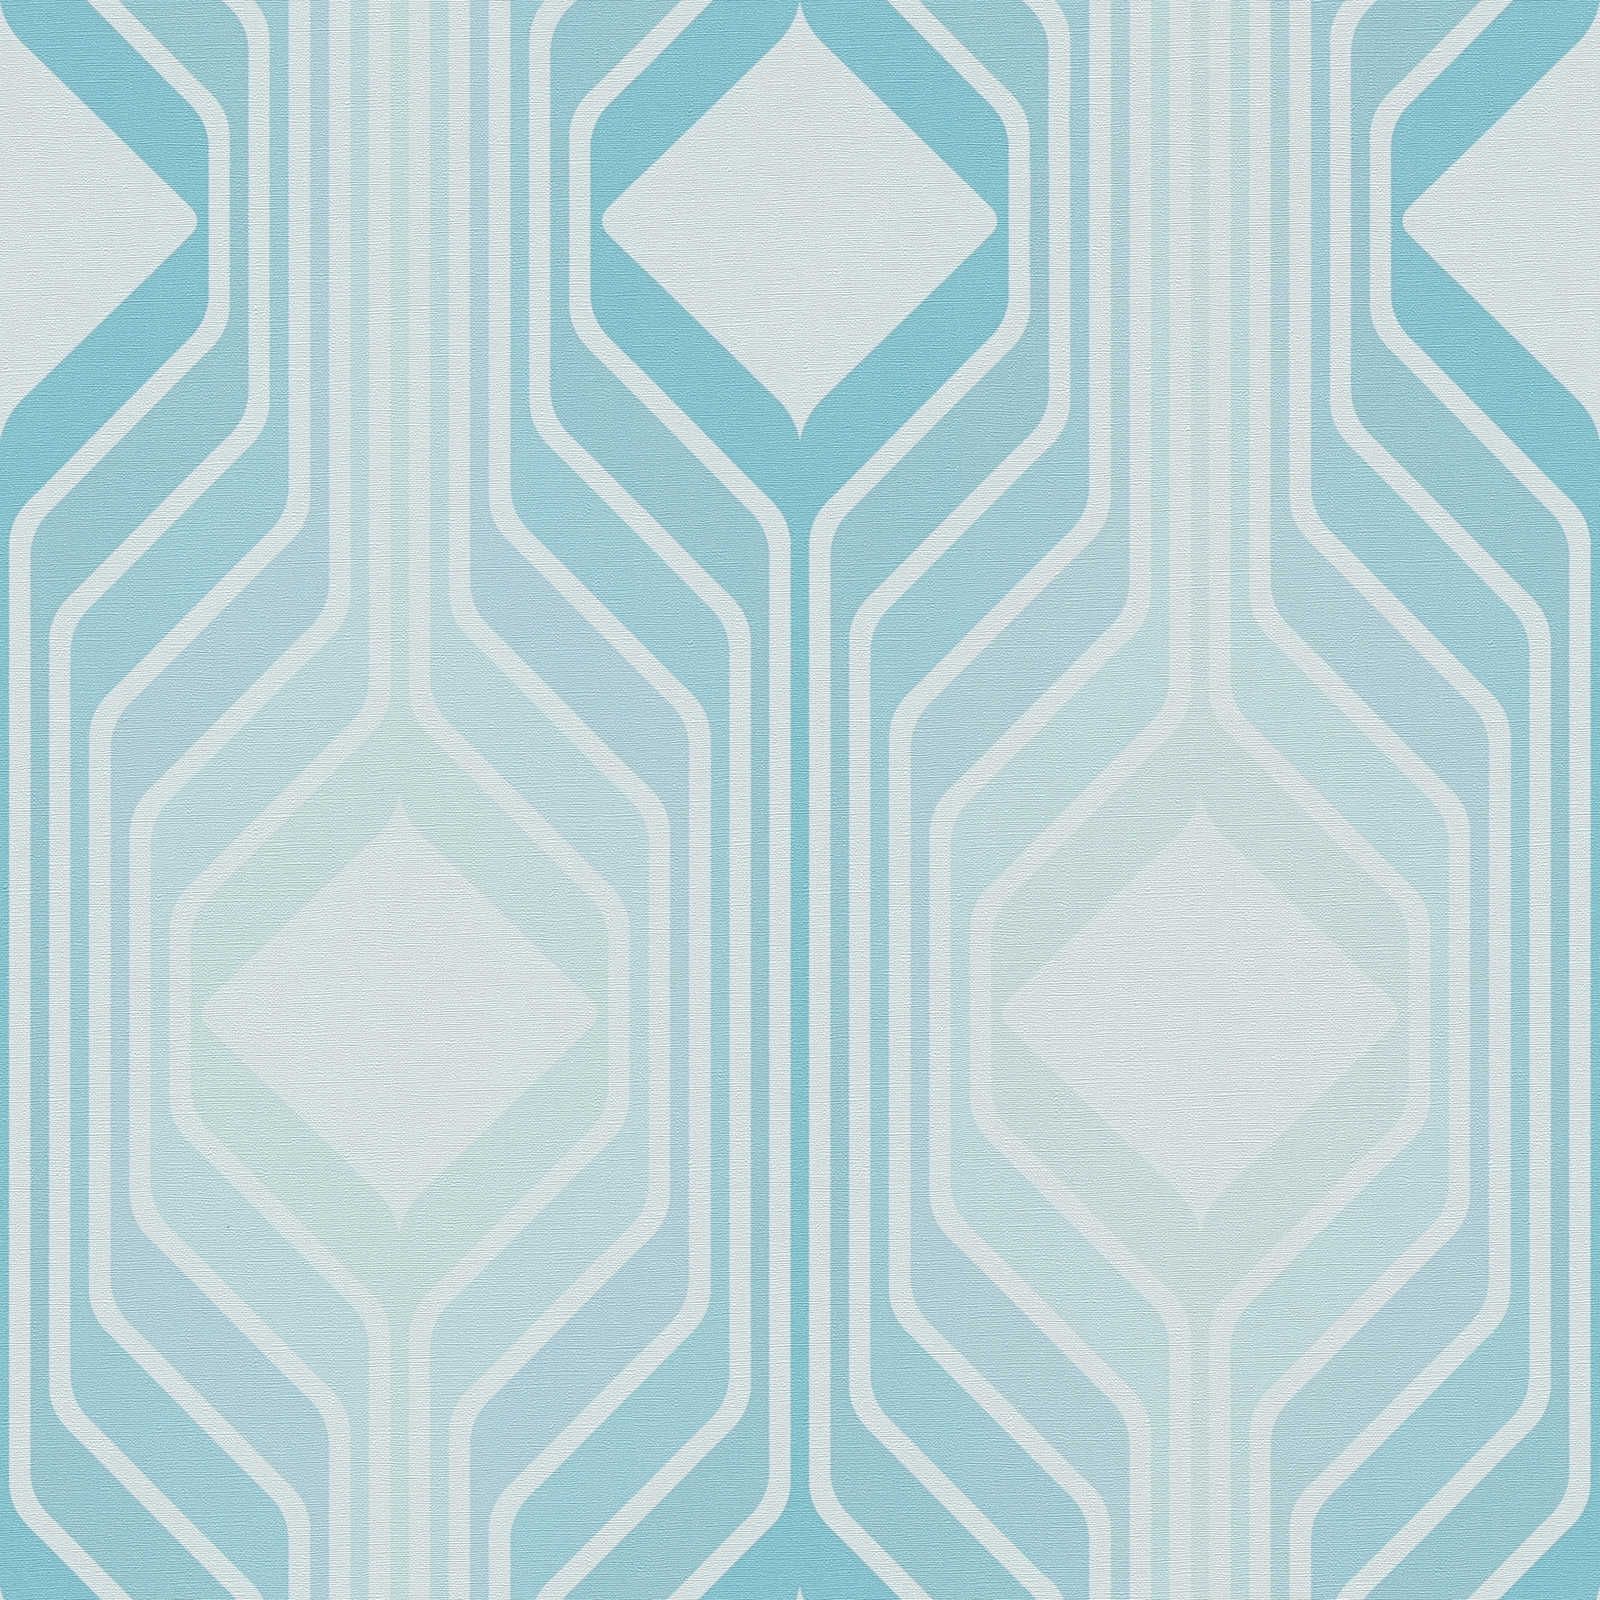 Rauten Muster auf Retro Vliestapete – Blau, Hellblau, Türkis
